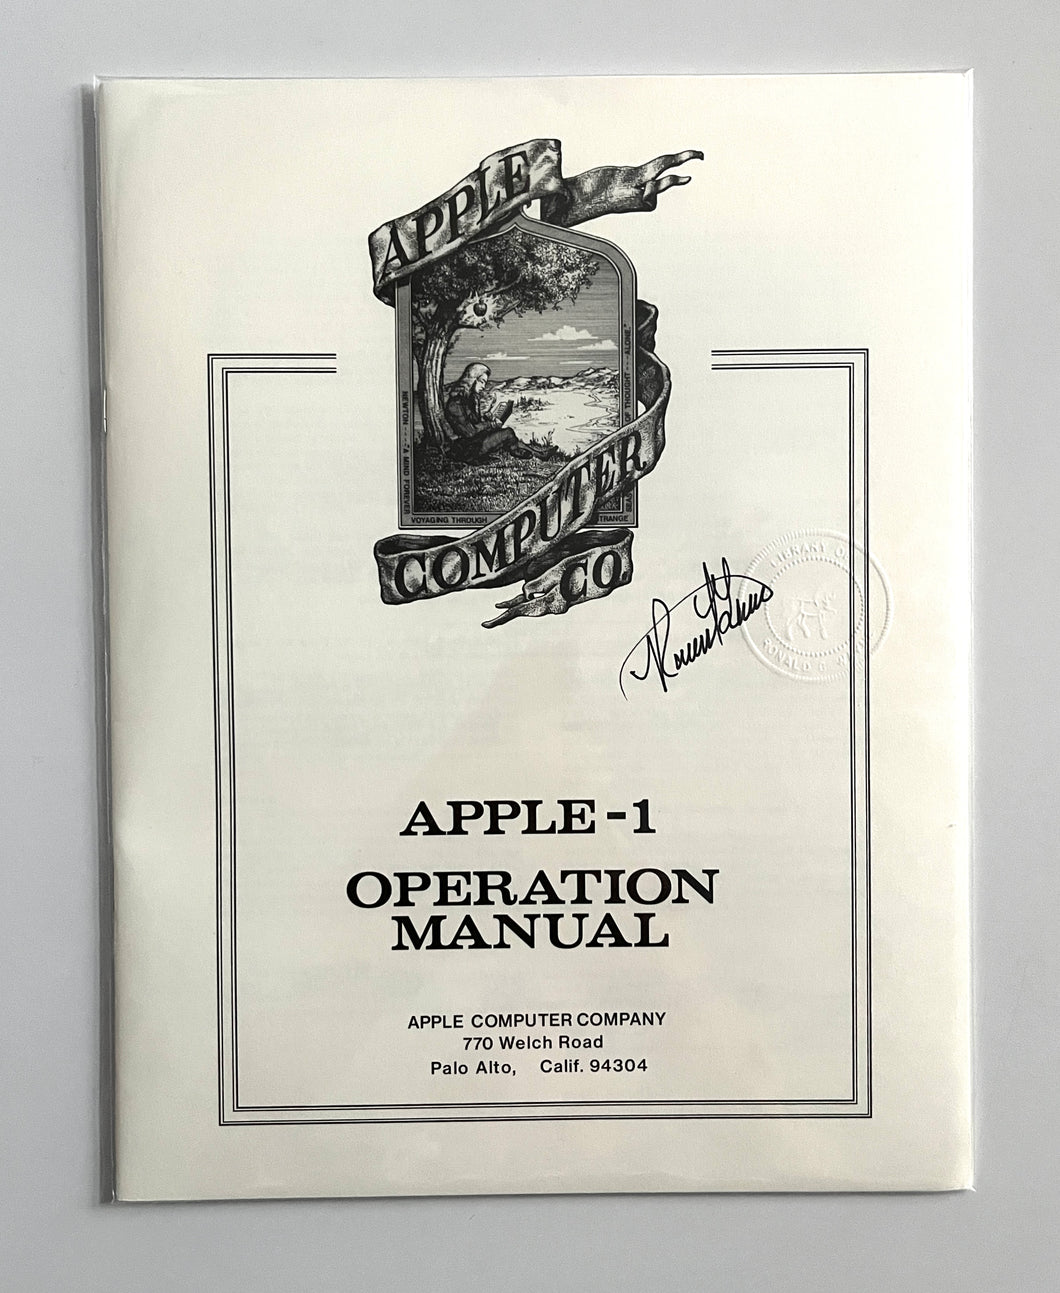 Exclusive: Premium Apple-1 Operation Manual - Signed